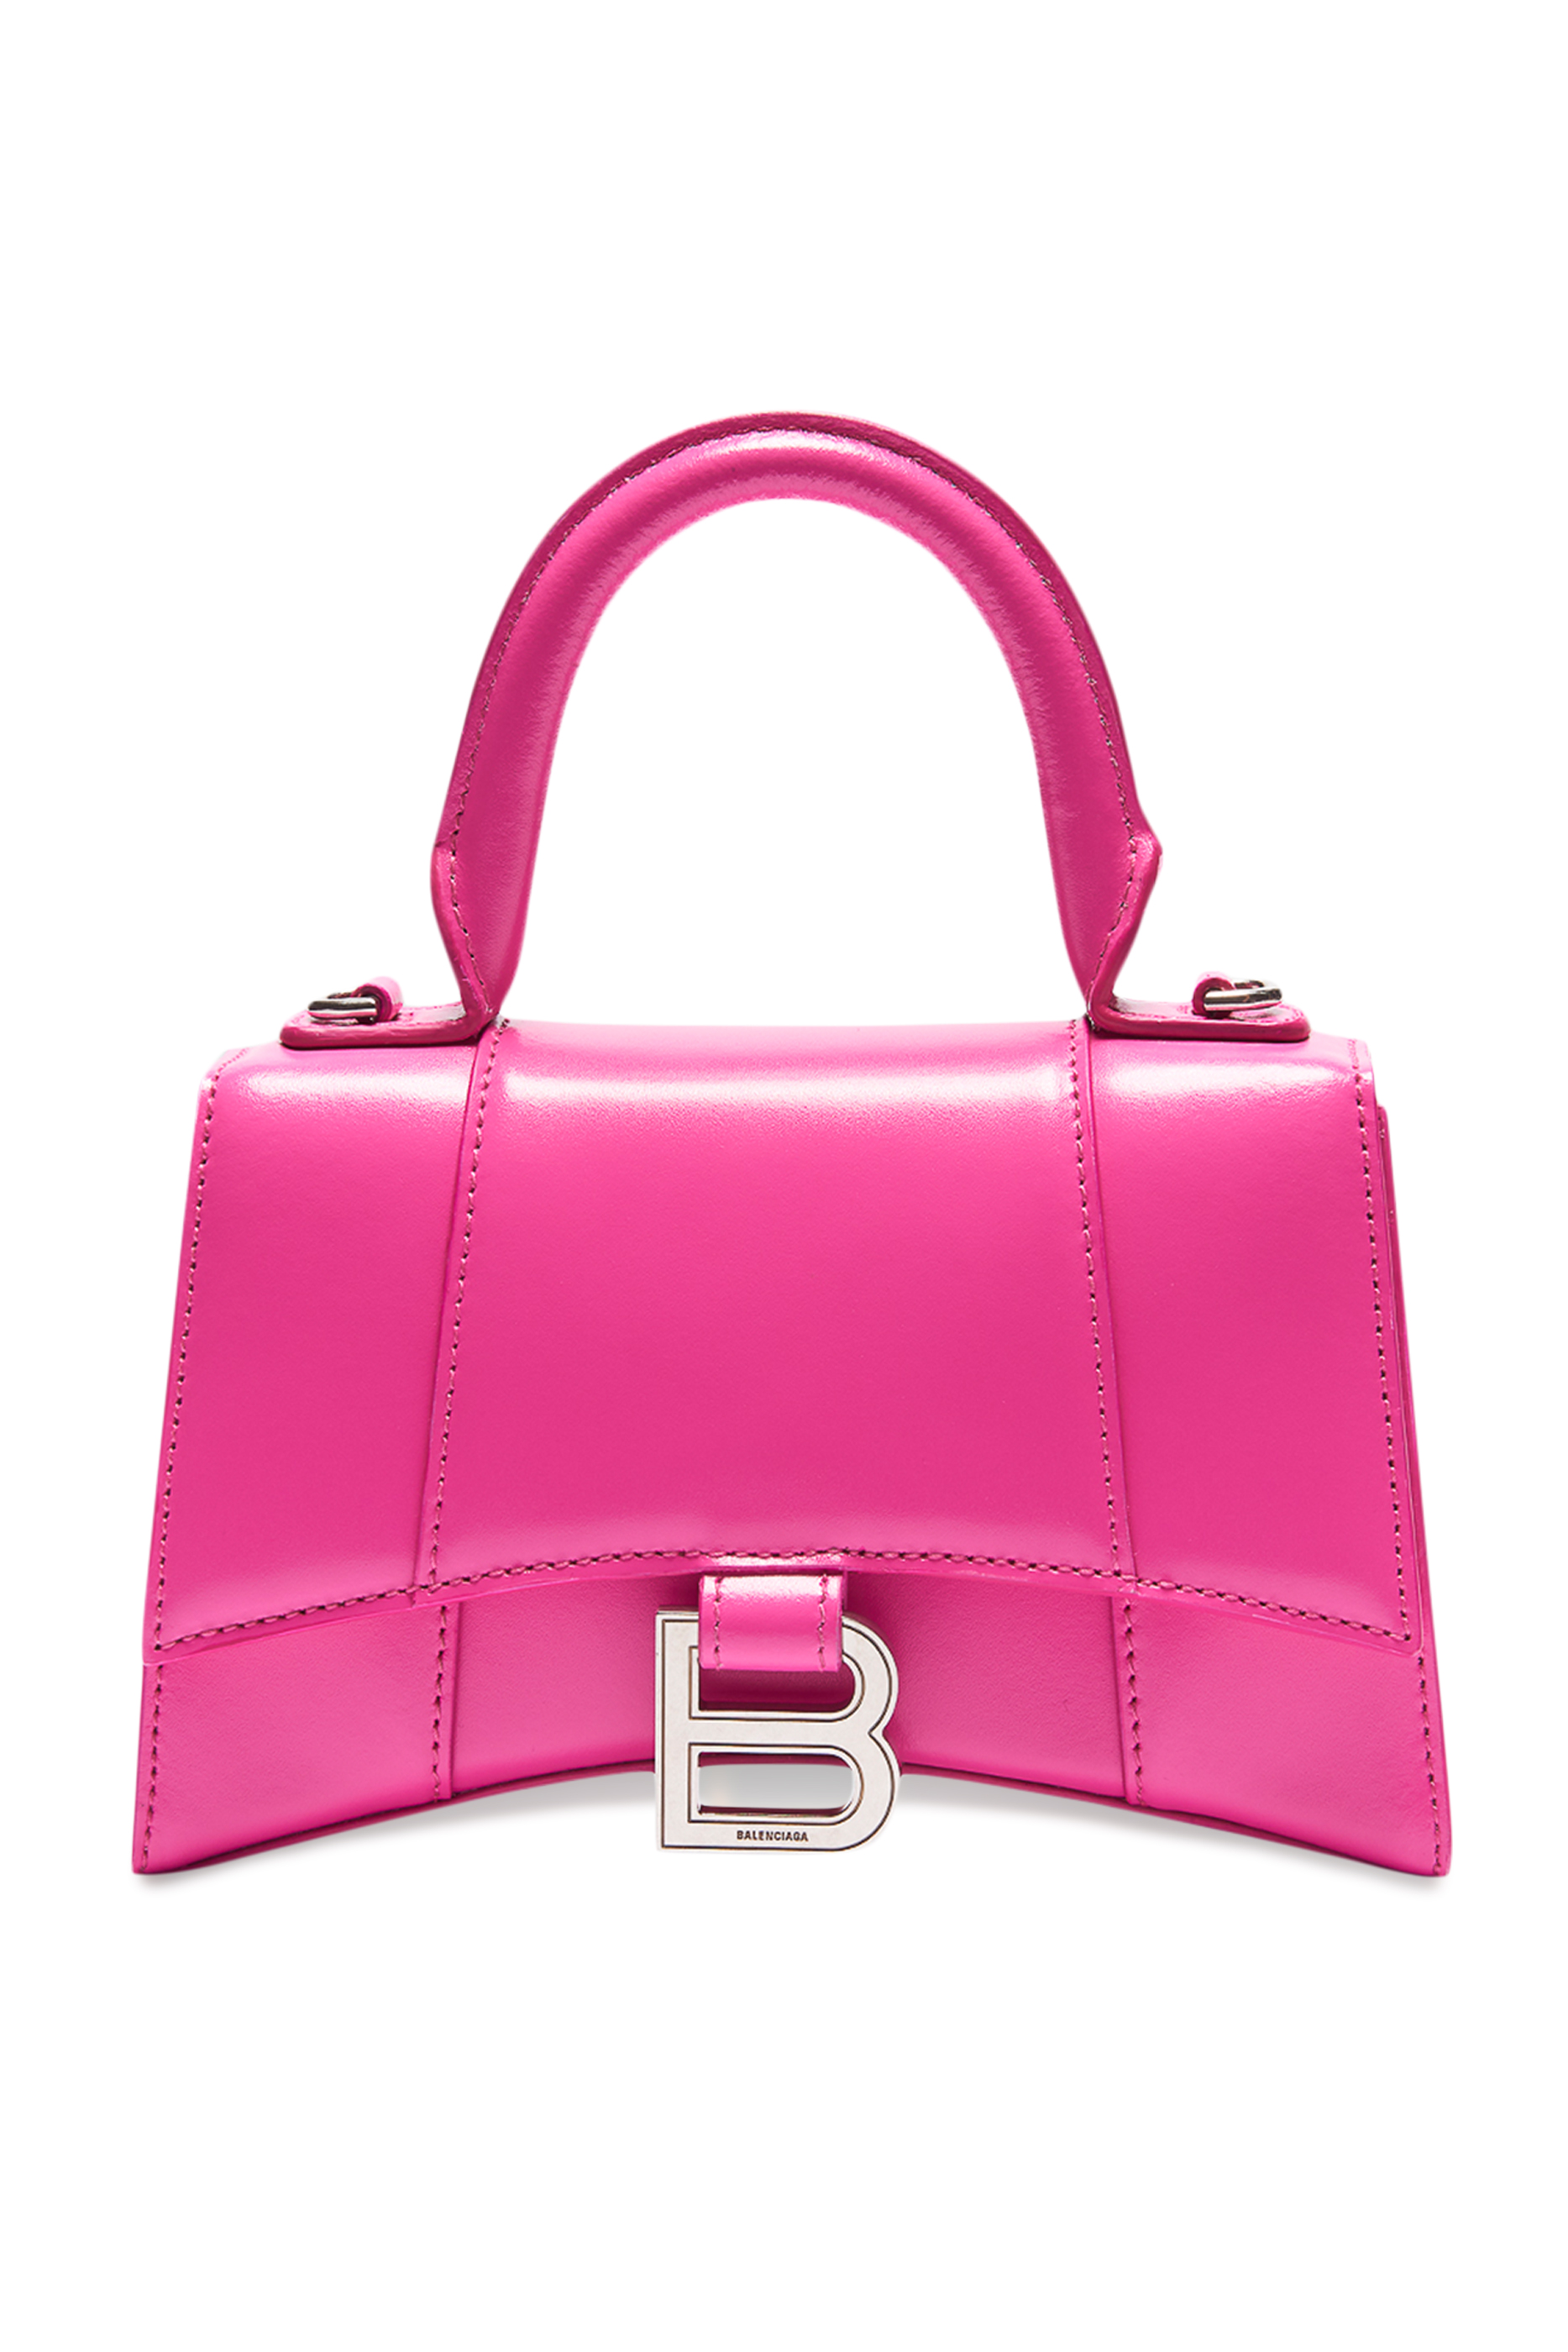 Balenciaga Bag Pink Purse Funeral | semashow.com